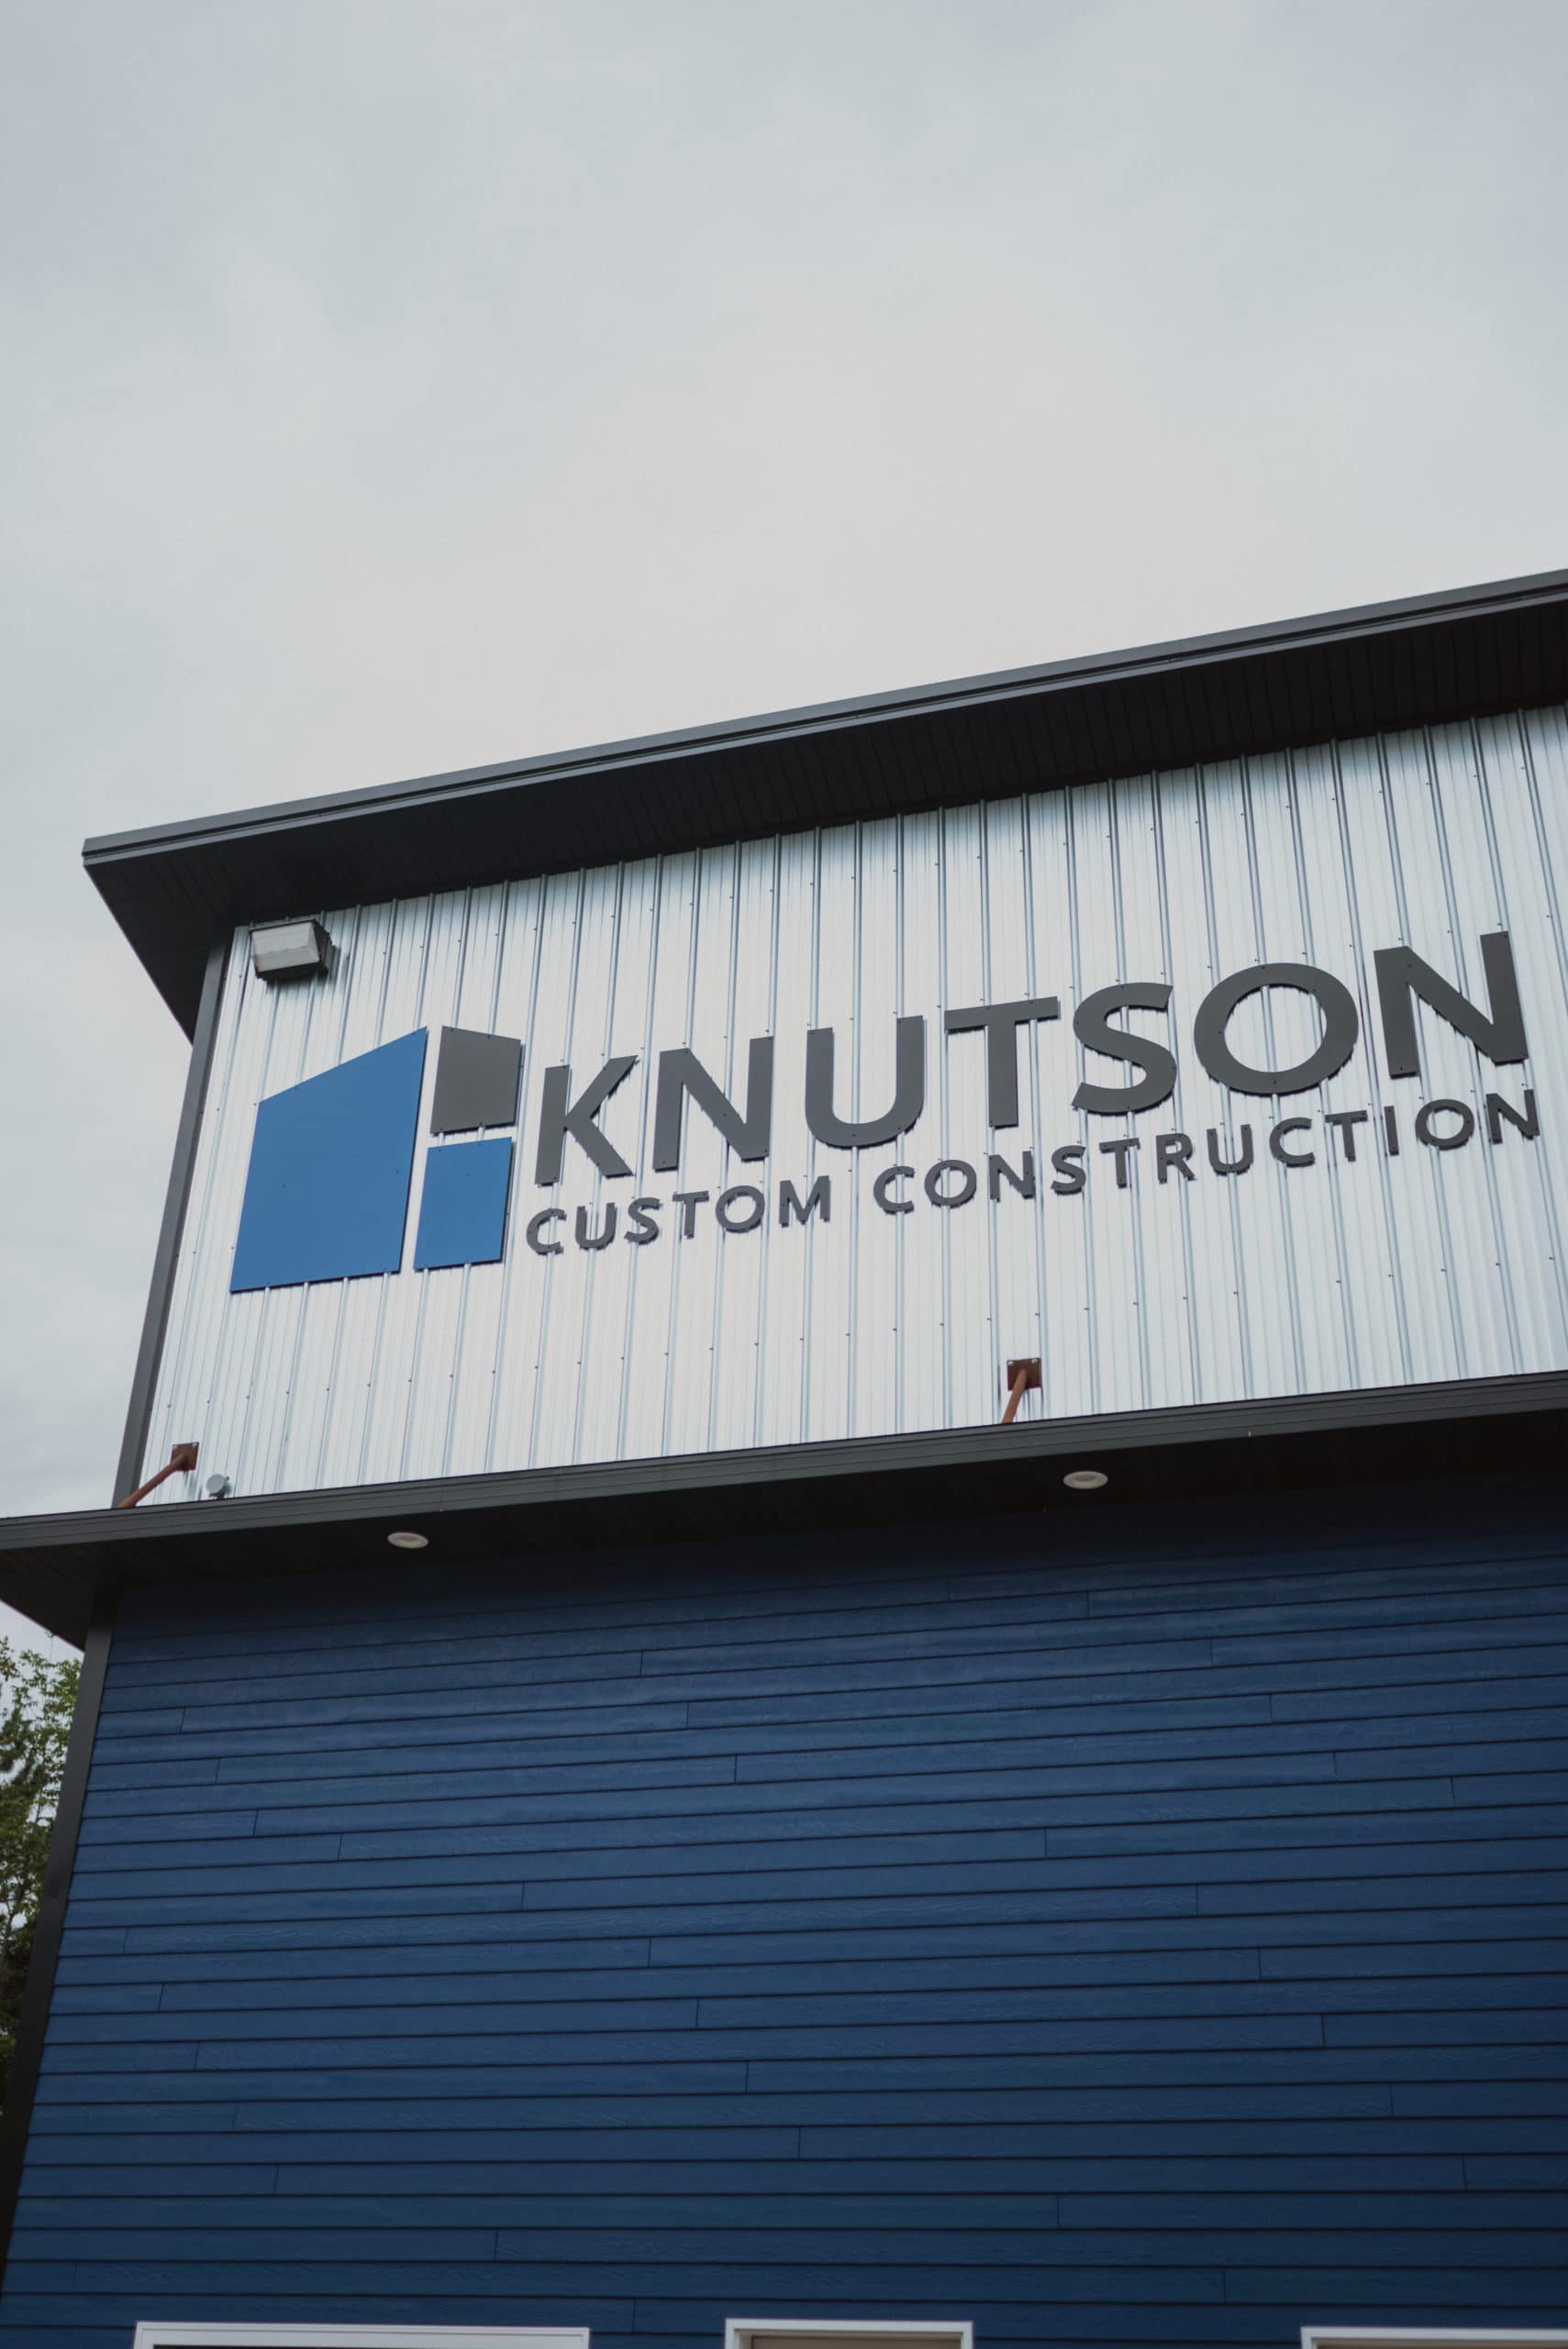 Knutson Custom Construction with Cedar and Stone